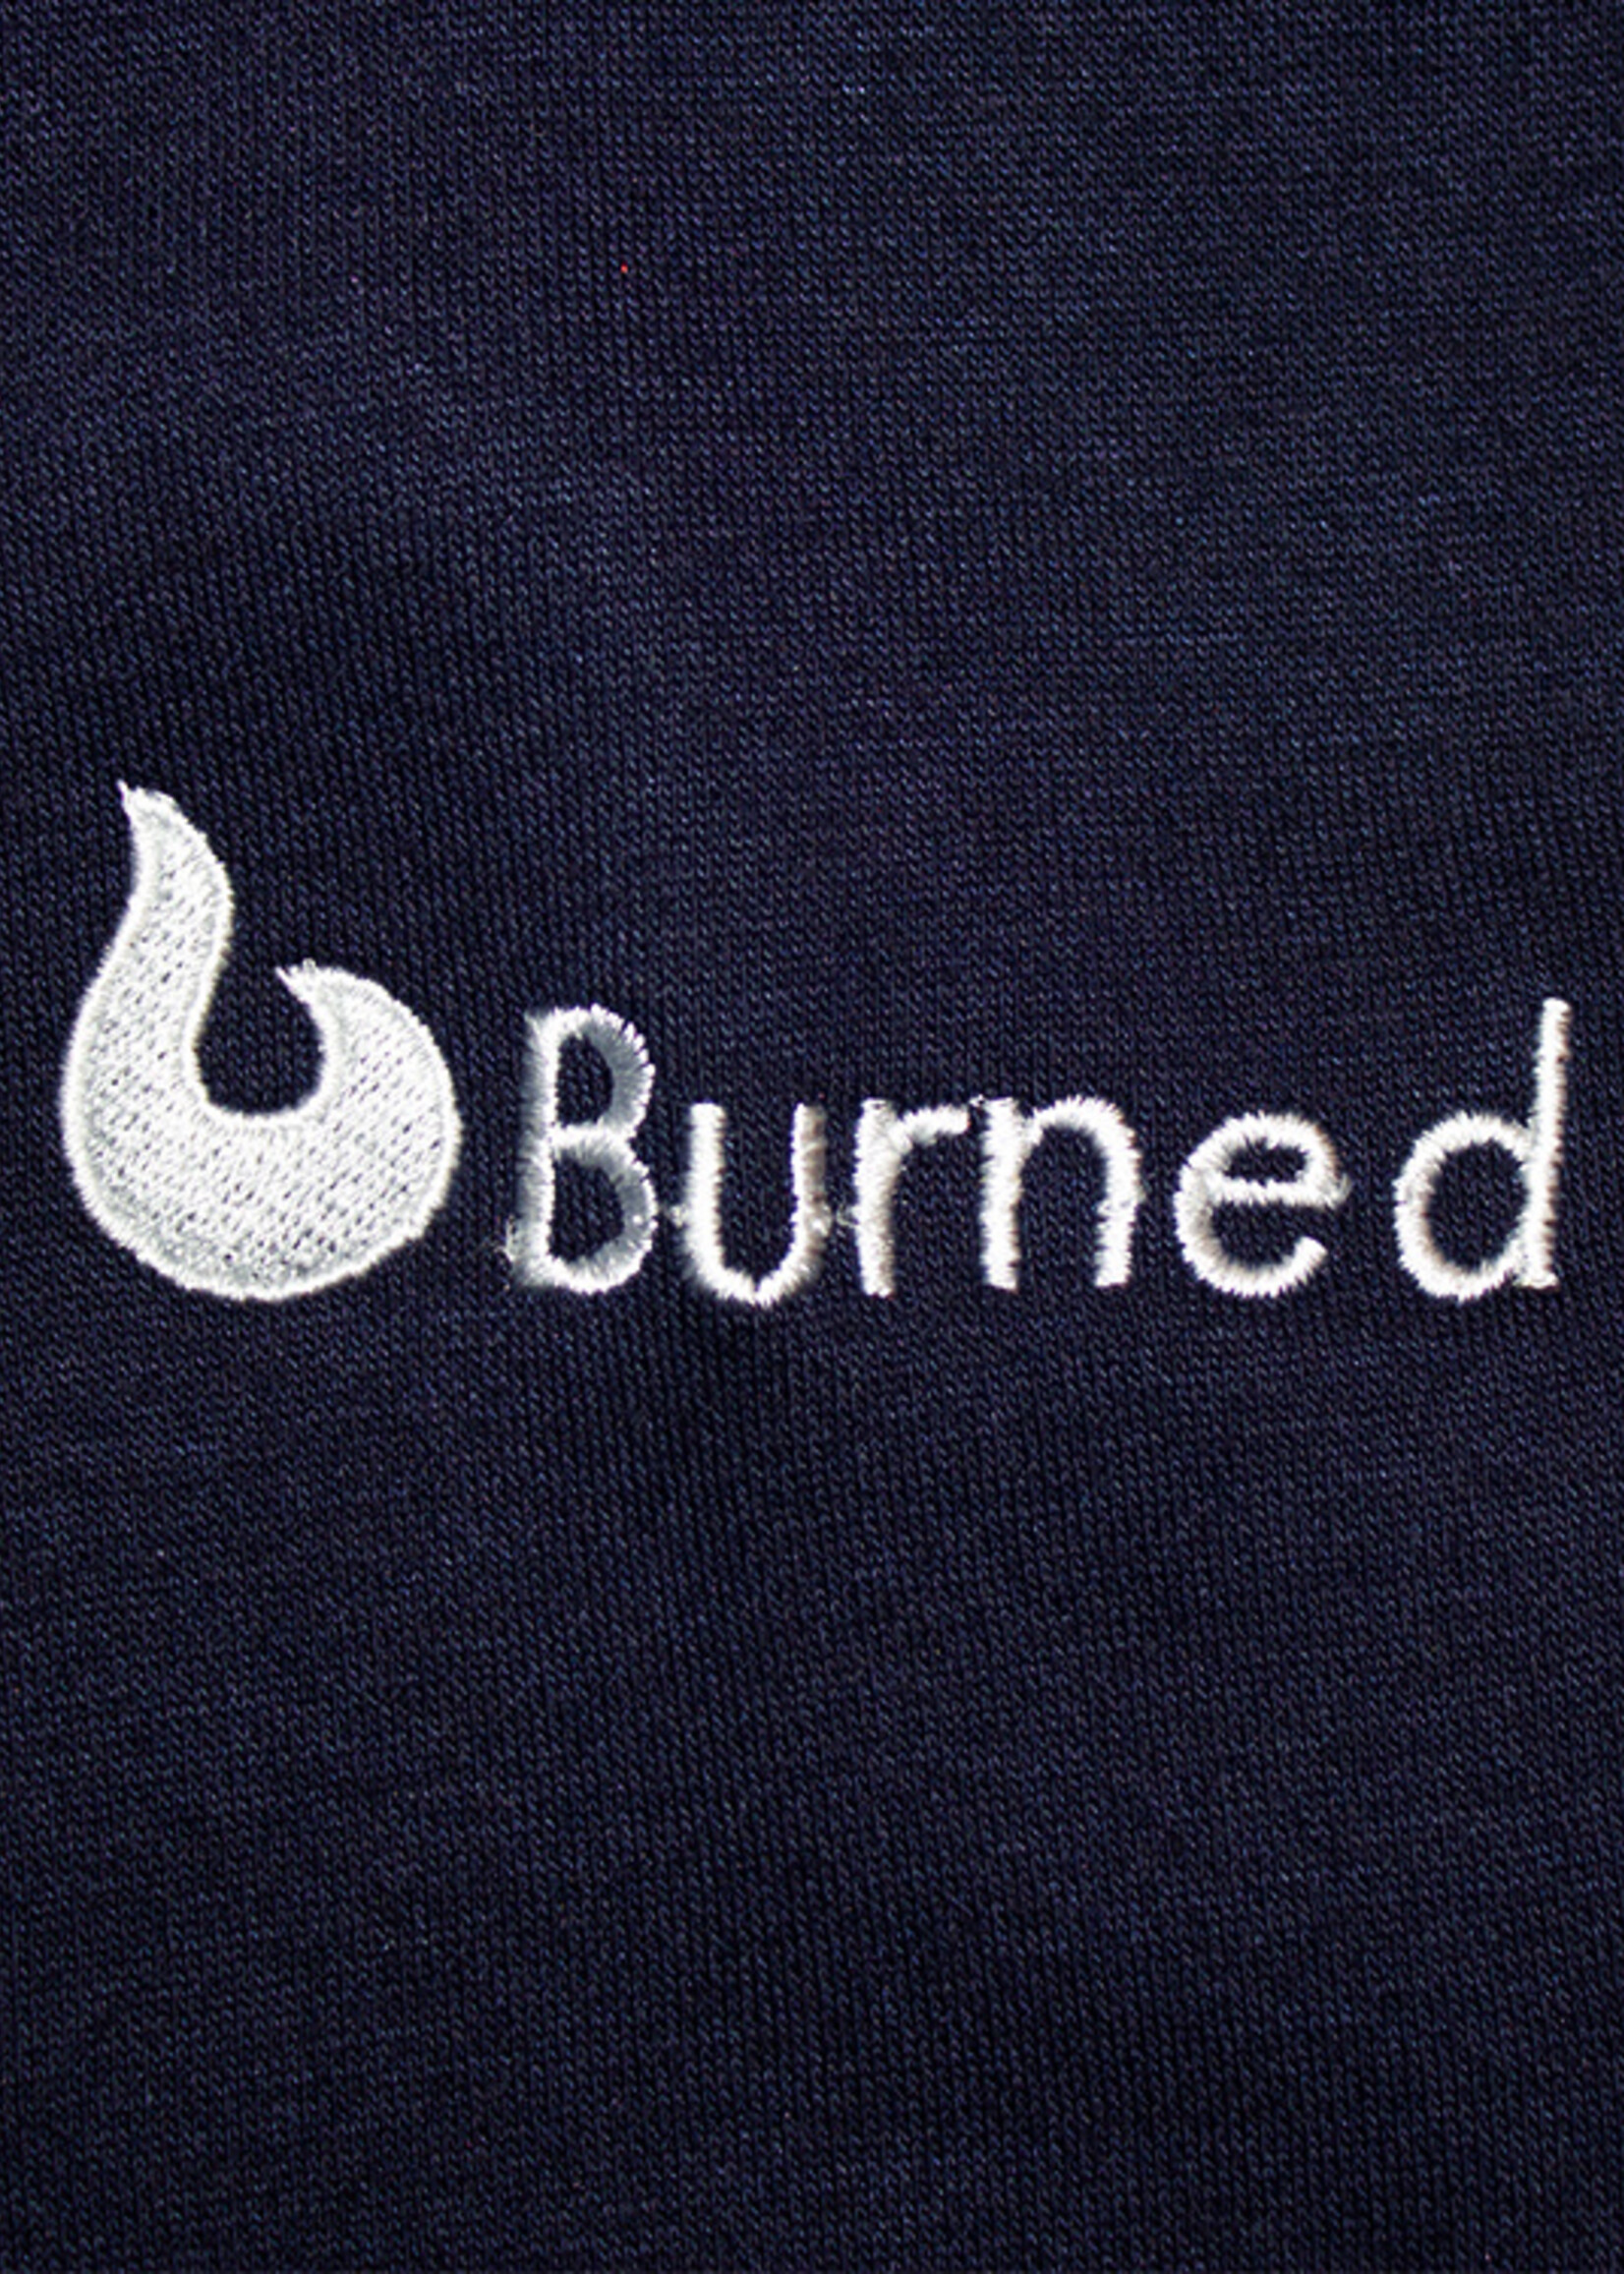 Burned BurnedCol rond bleu marine